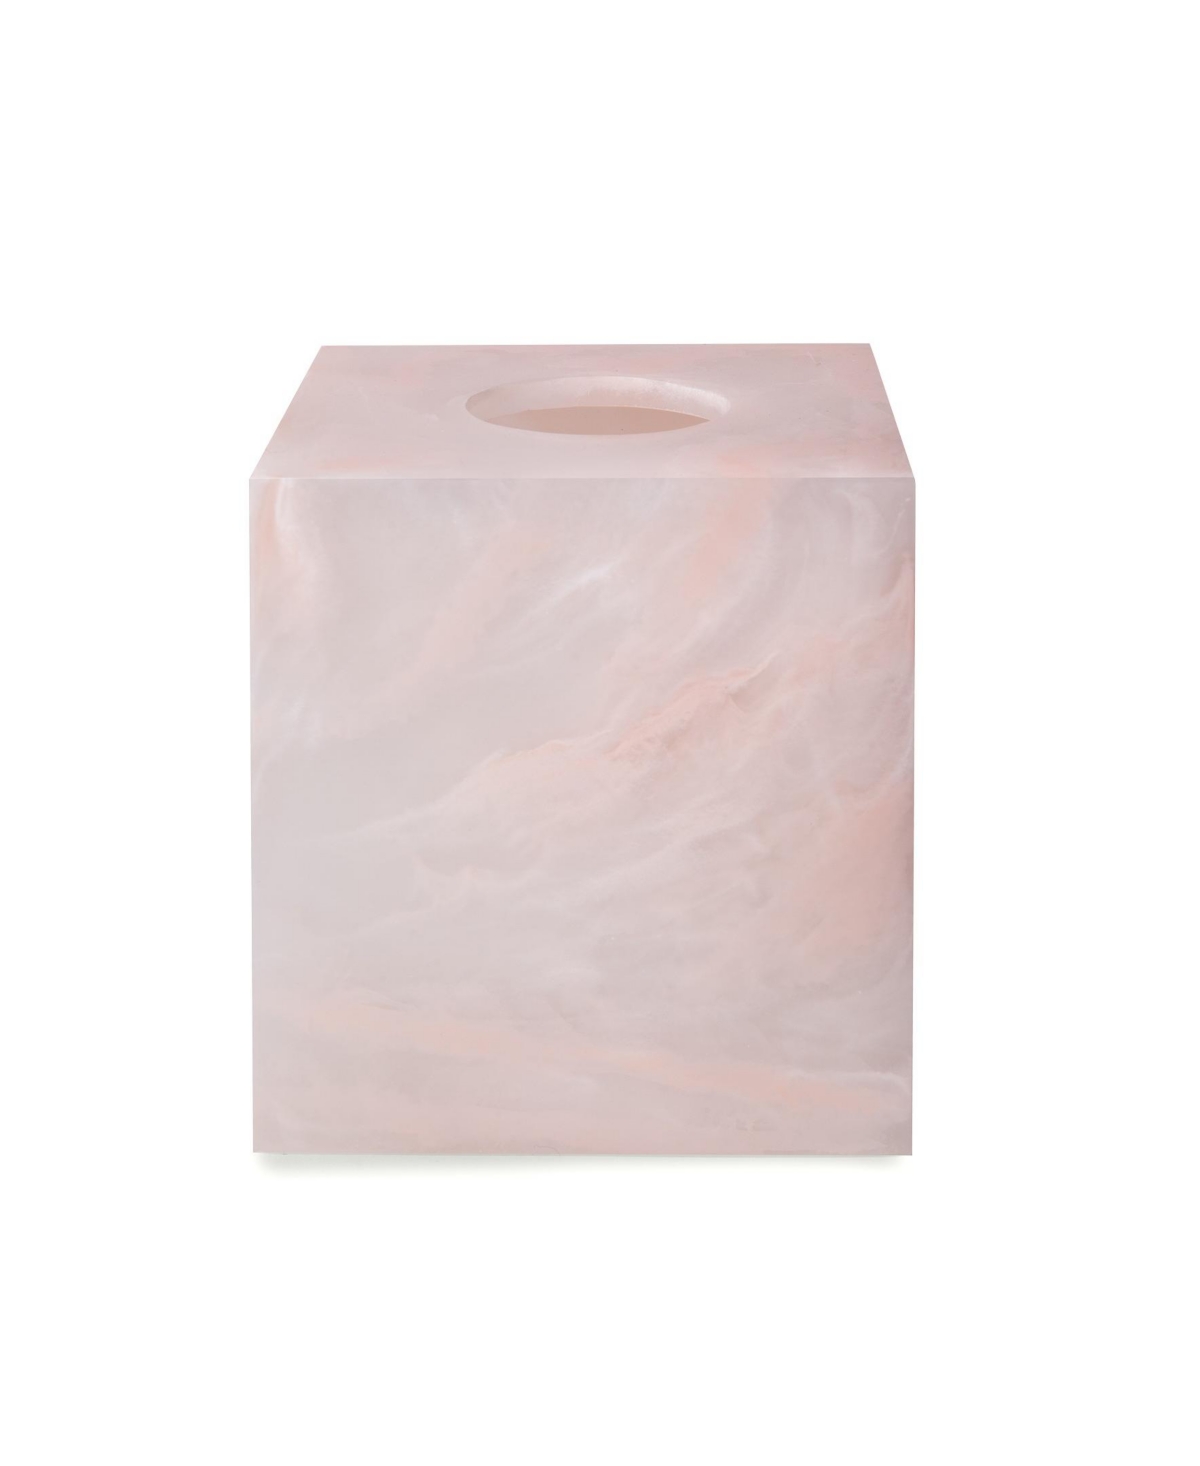 Cassadecor Rose Resin Tissue Box Cover In Pale Pink